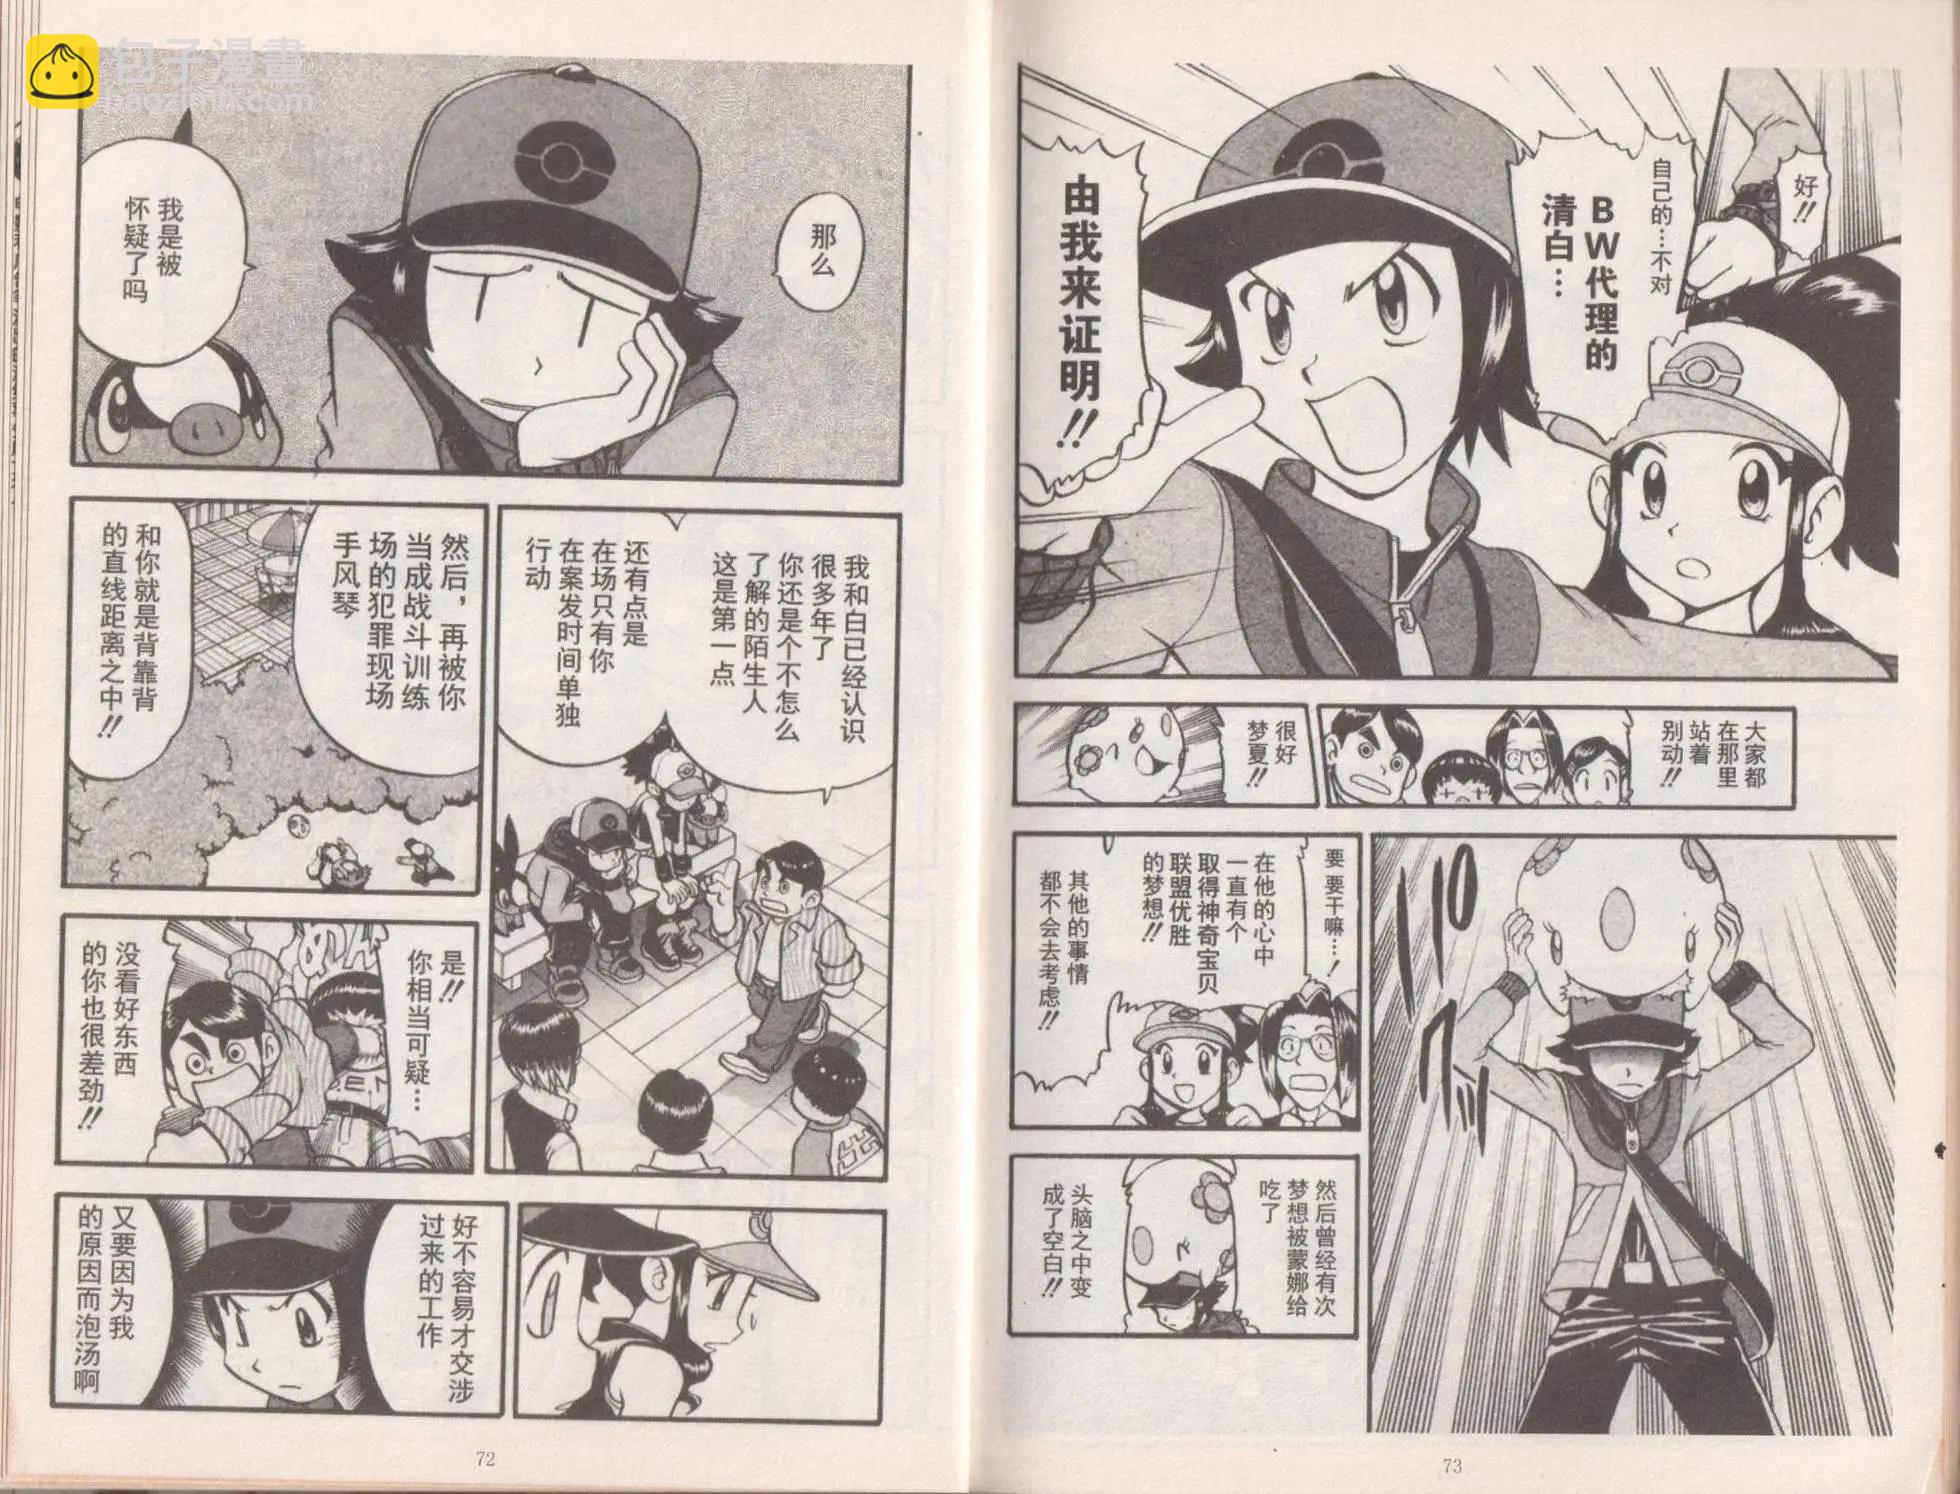 口袋迷pokemon - 第50卷(1/2) - 6